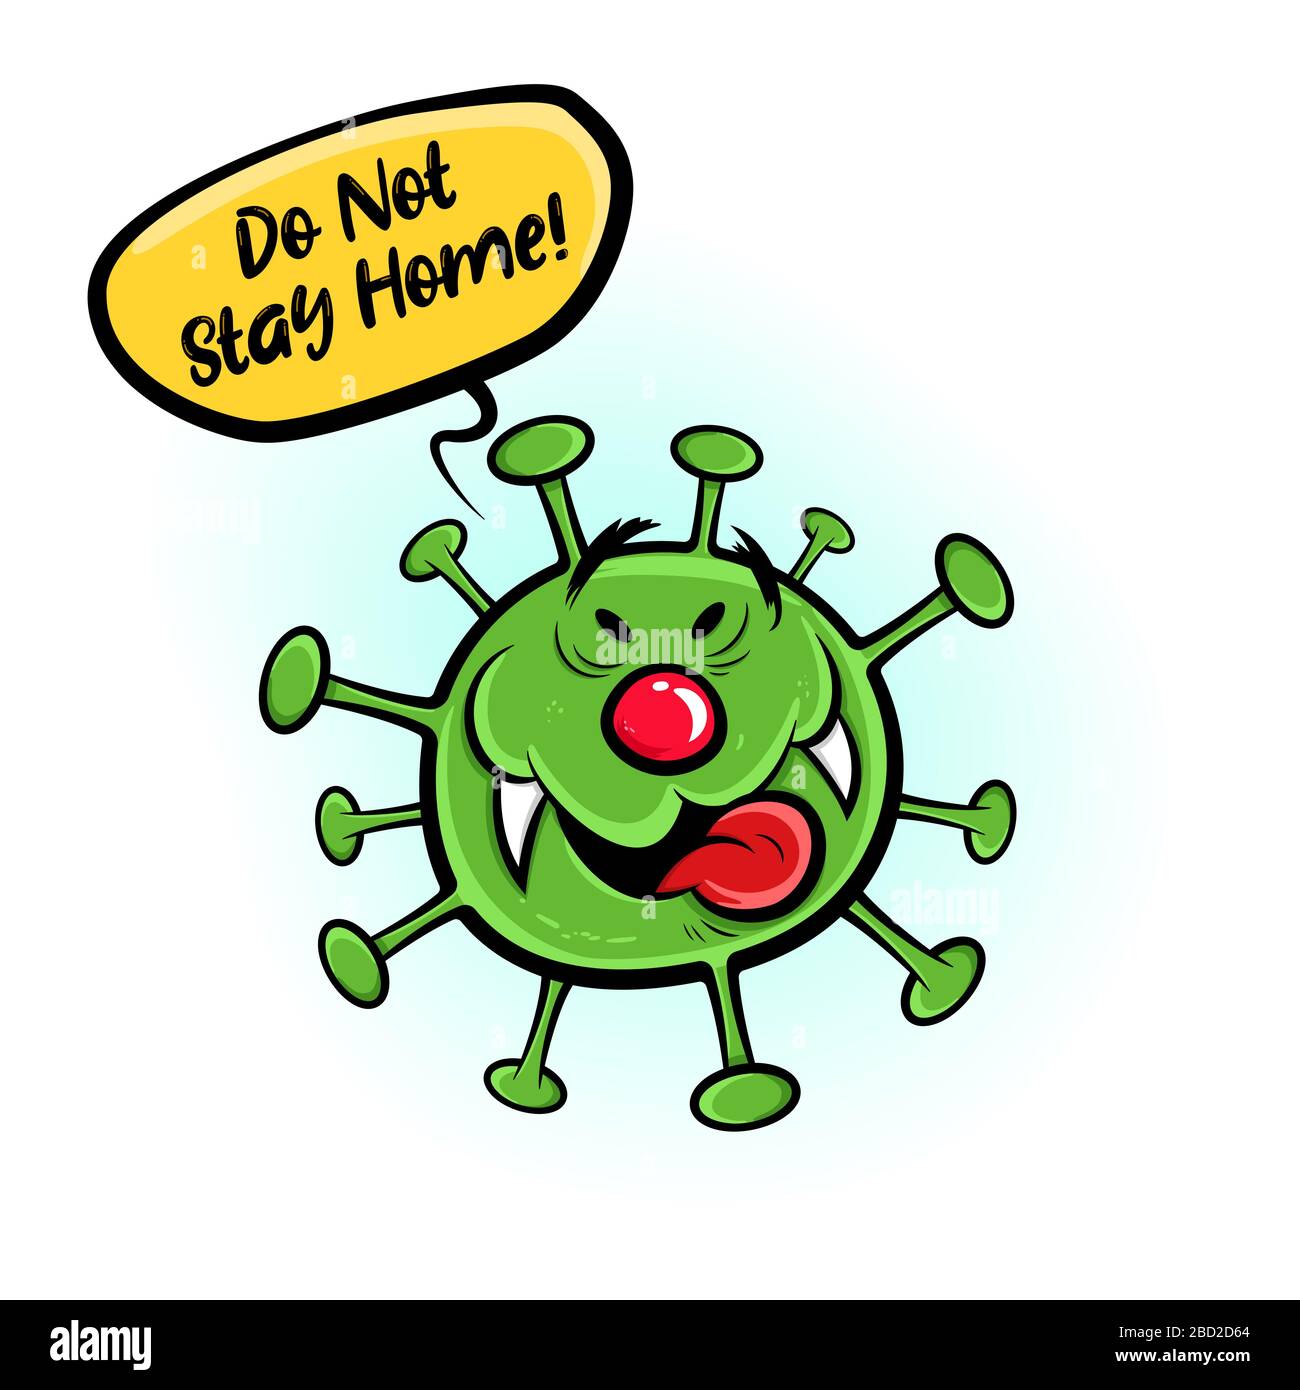 Coronavirus COVID-19 mit unheimlich bösem Gesicht. Neuartiger Corona-Virus-Pandemie gegen Stay Home Rat! Stock Vektor